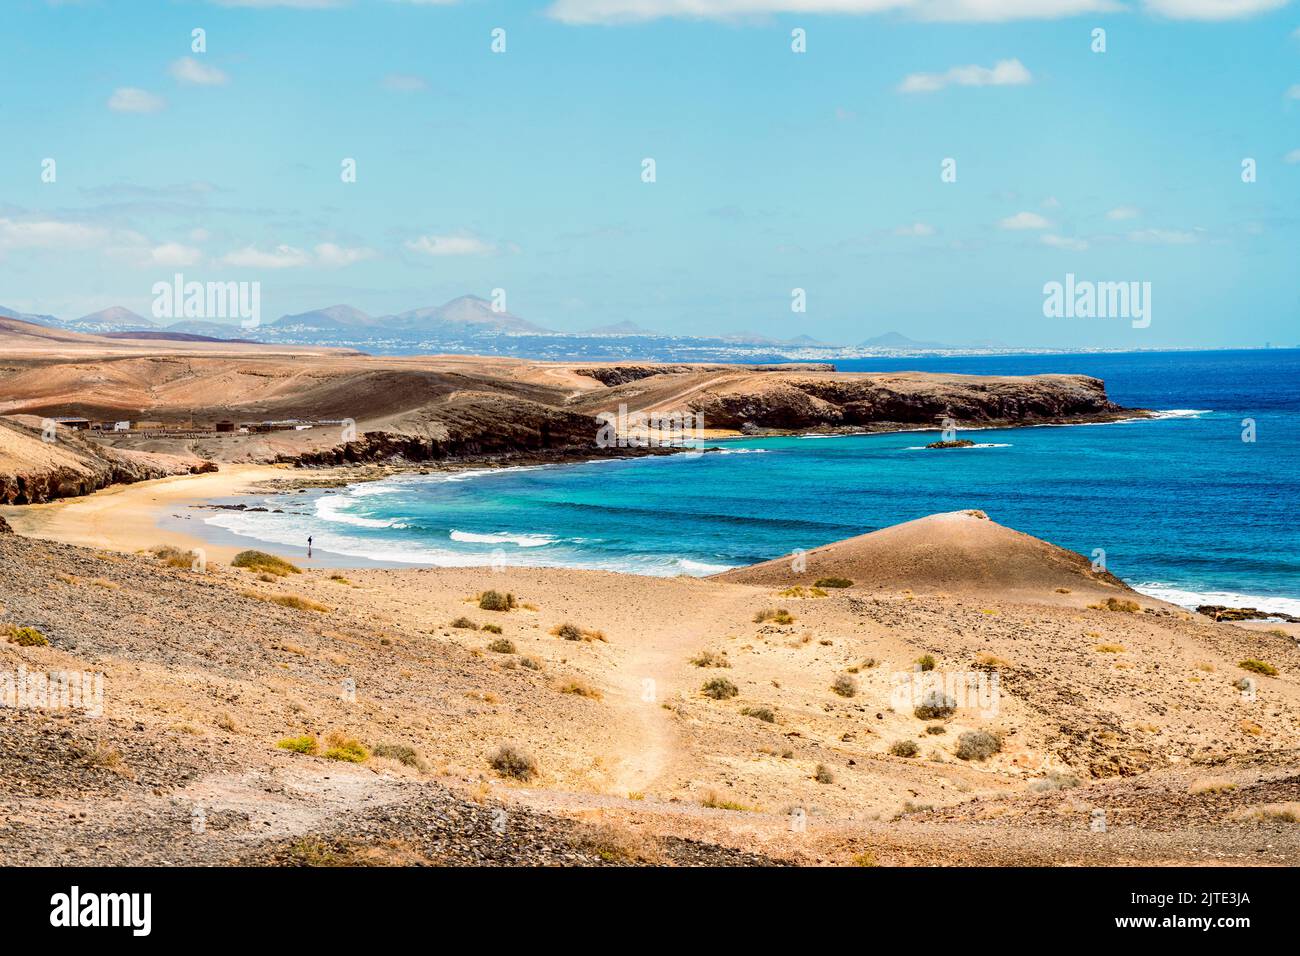 Landscape of beach called Caleta del Congrio in Los Ajaches National Park at Lanzarote, Canary Islands, Spain Stock Photo